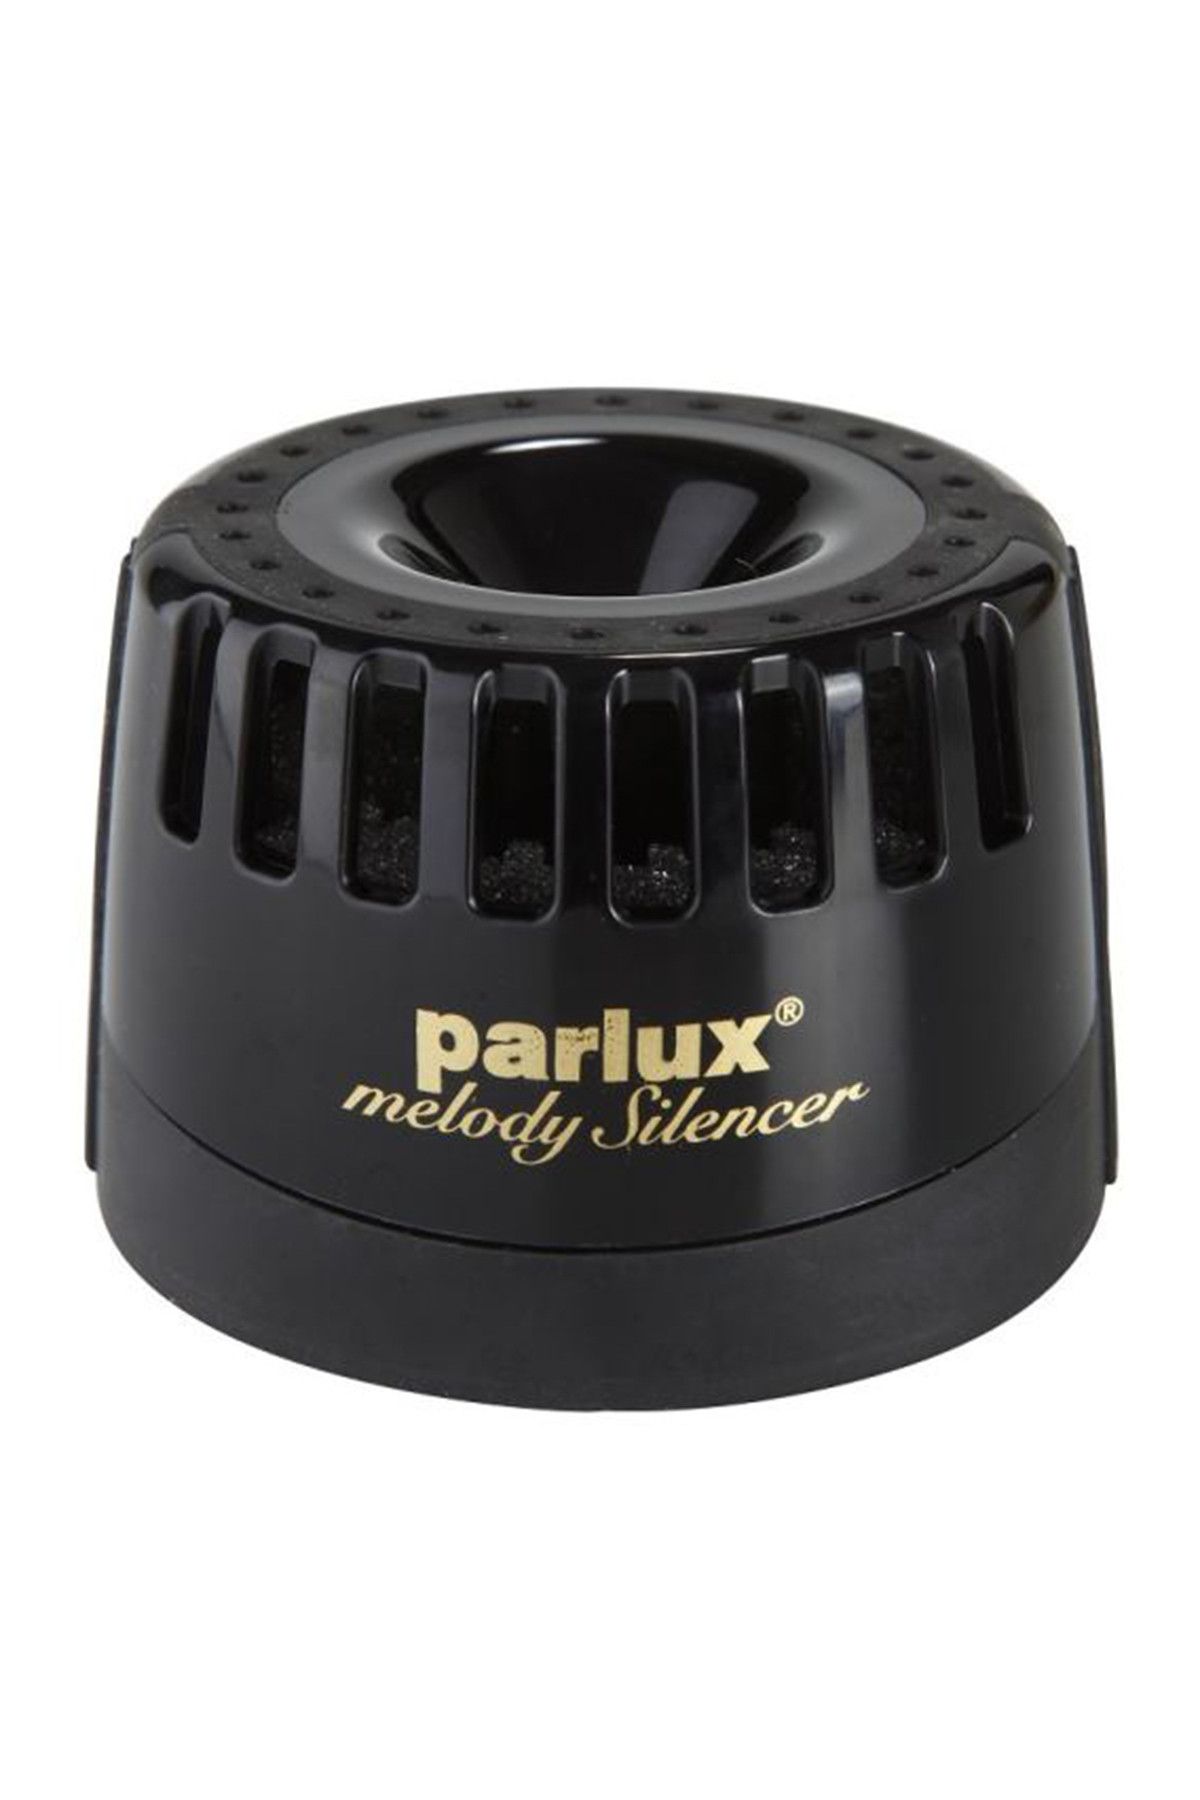 Parlux Fön Makinesi Susturucusu - Melody Silencer Eco Friendly 8021233119019